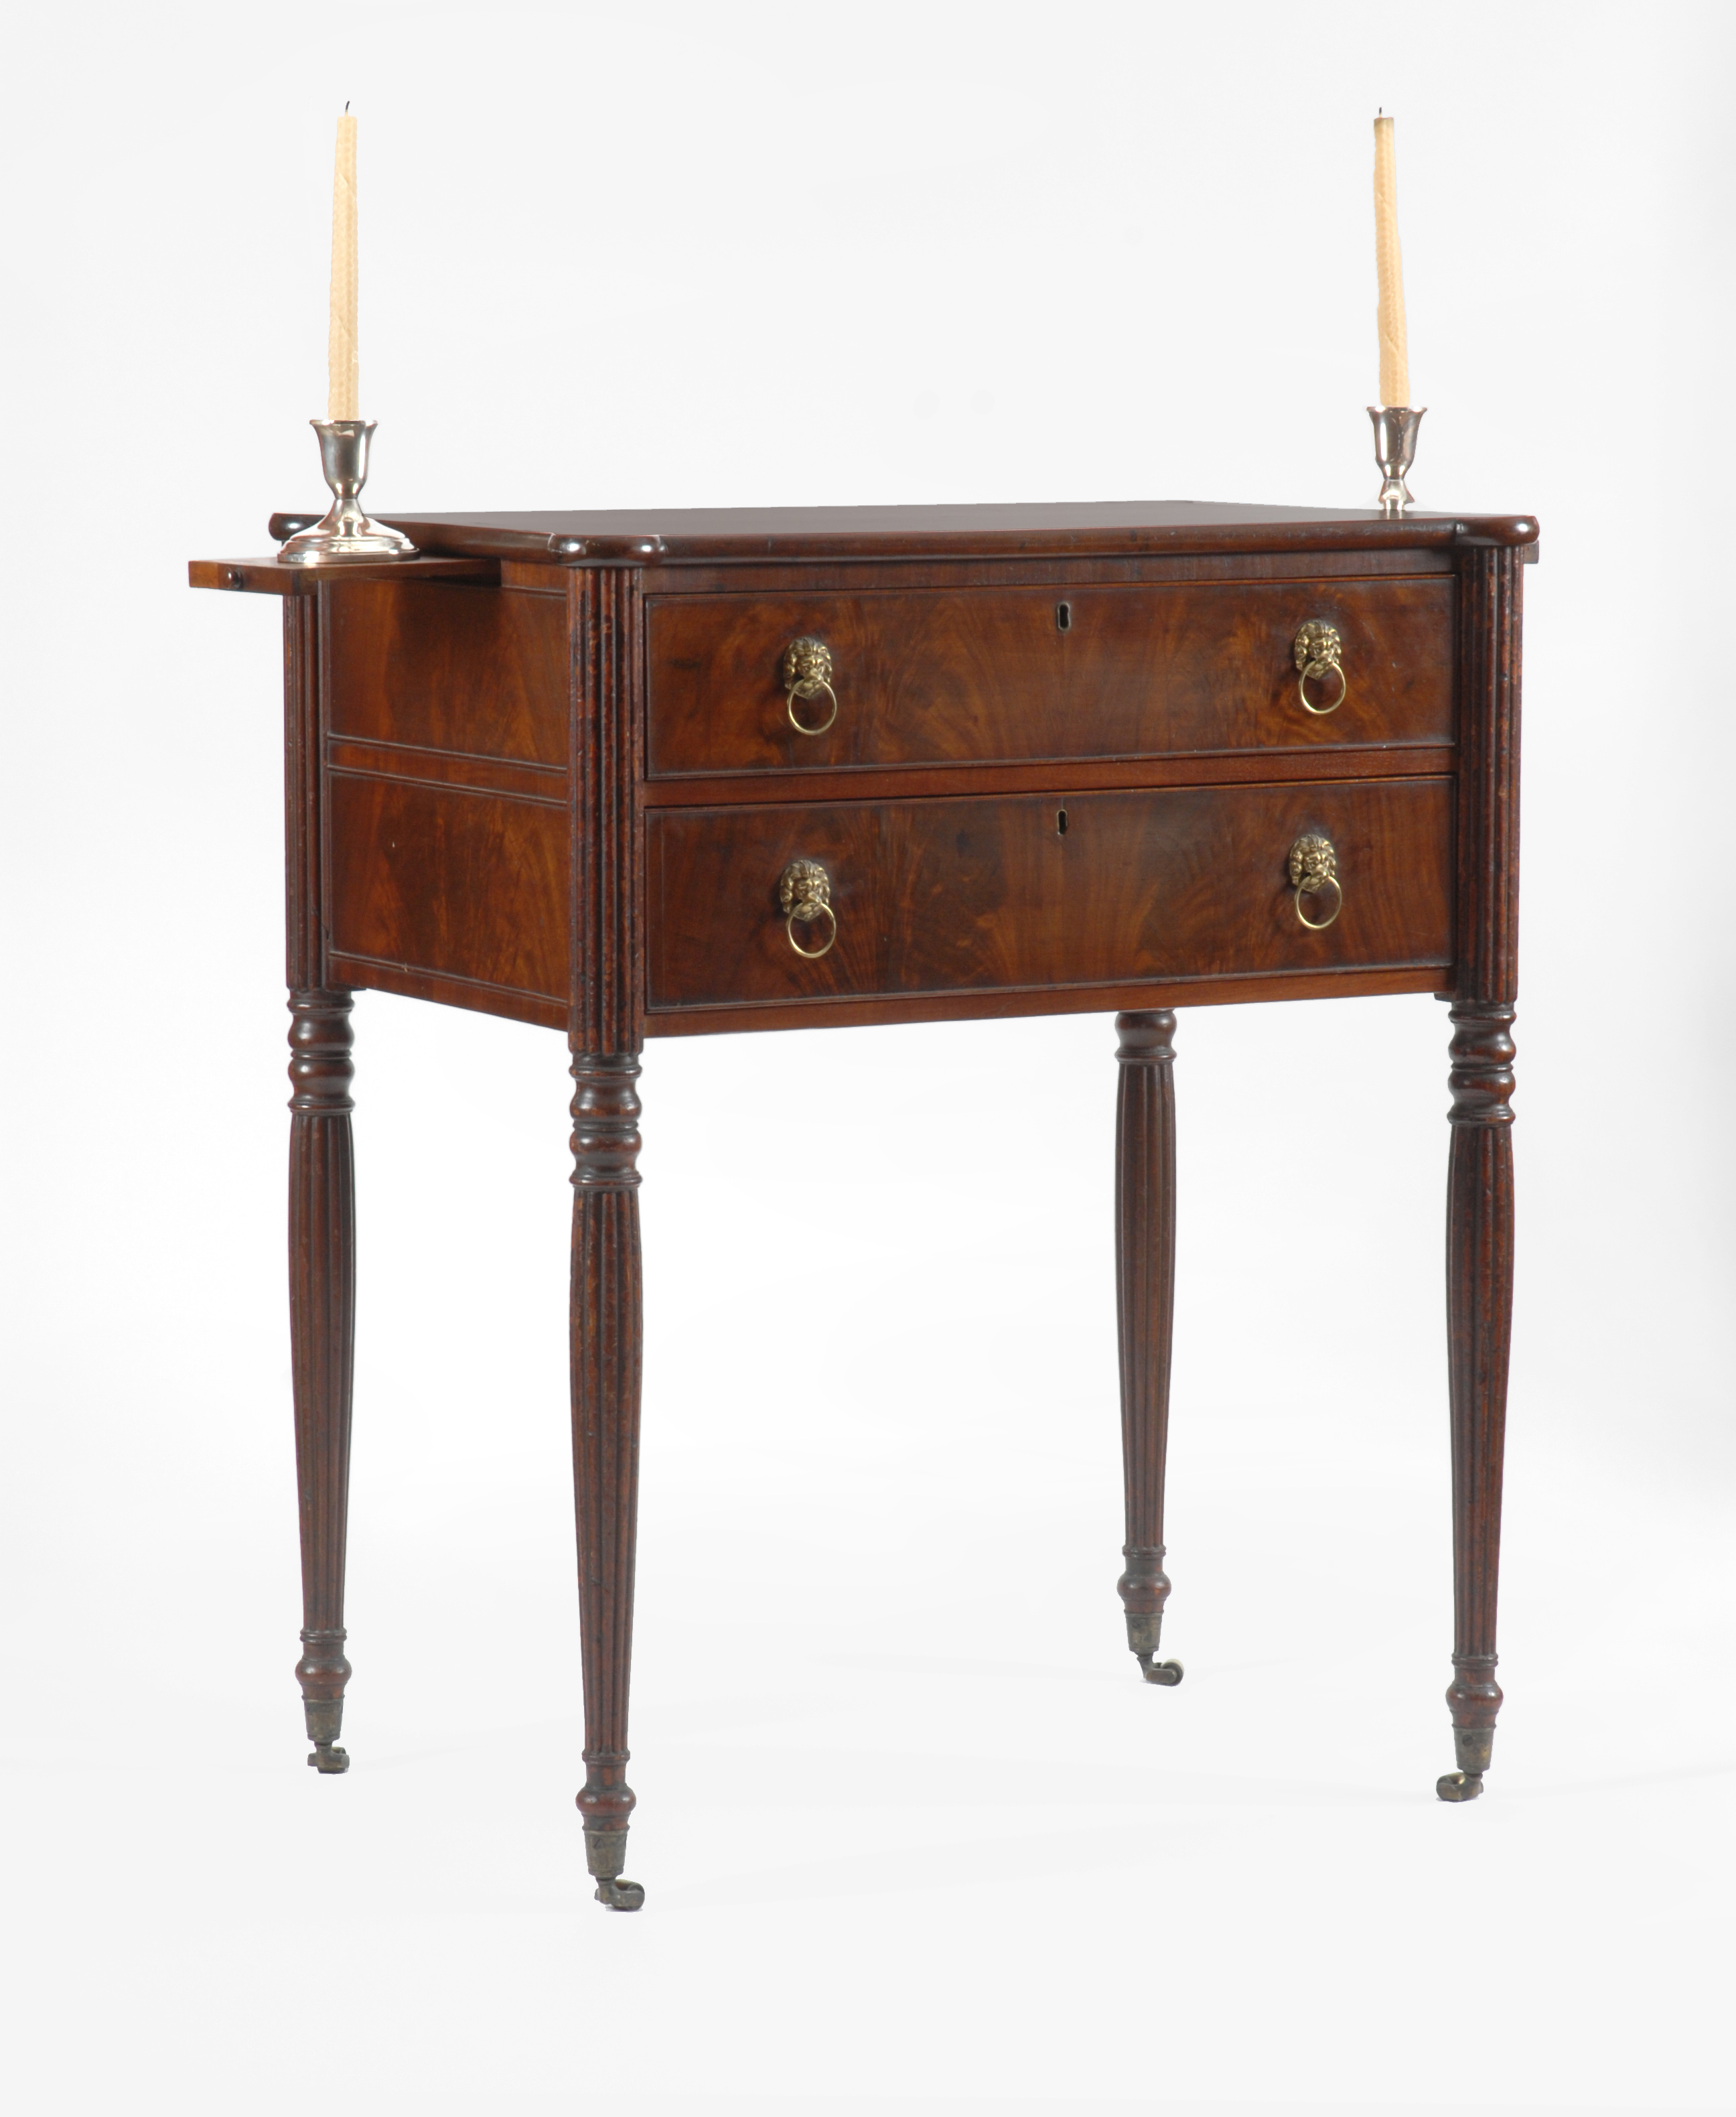 A very fine Sheraton mahogany two drawer work table, attributed to Thomas Seymour Boston, Massachusetts, circa 1815.